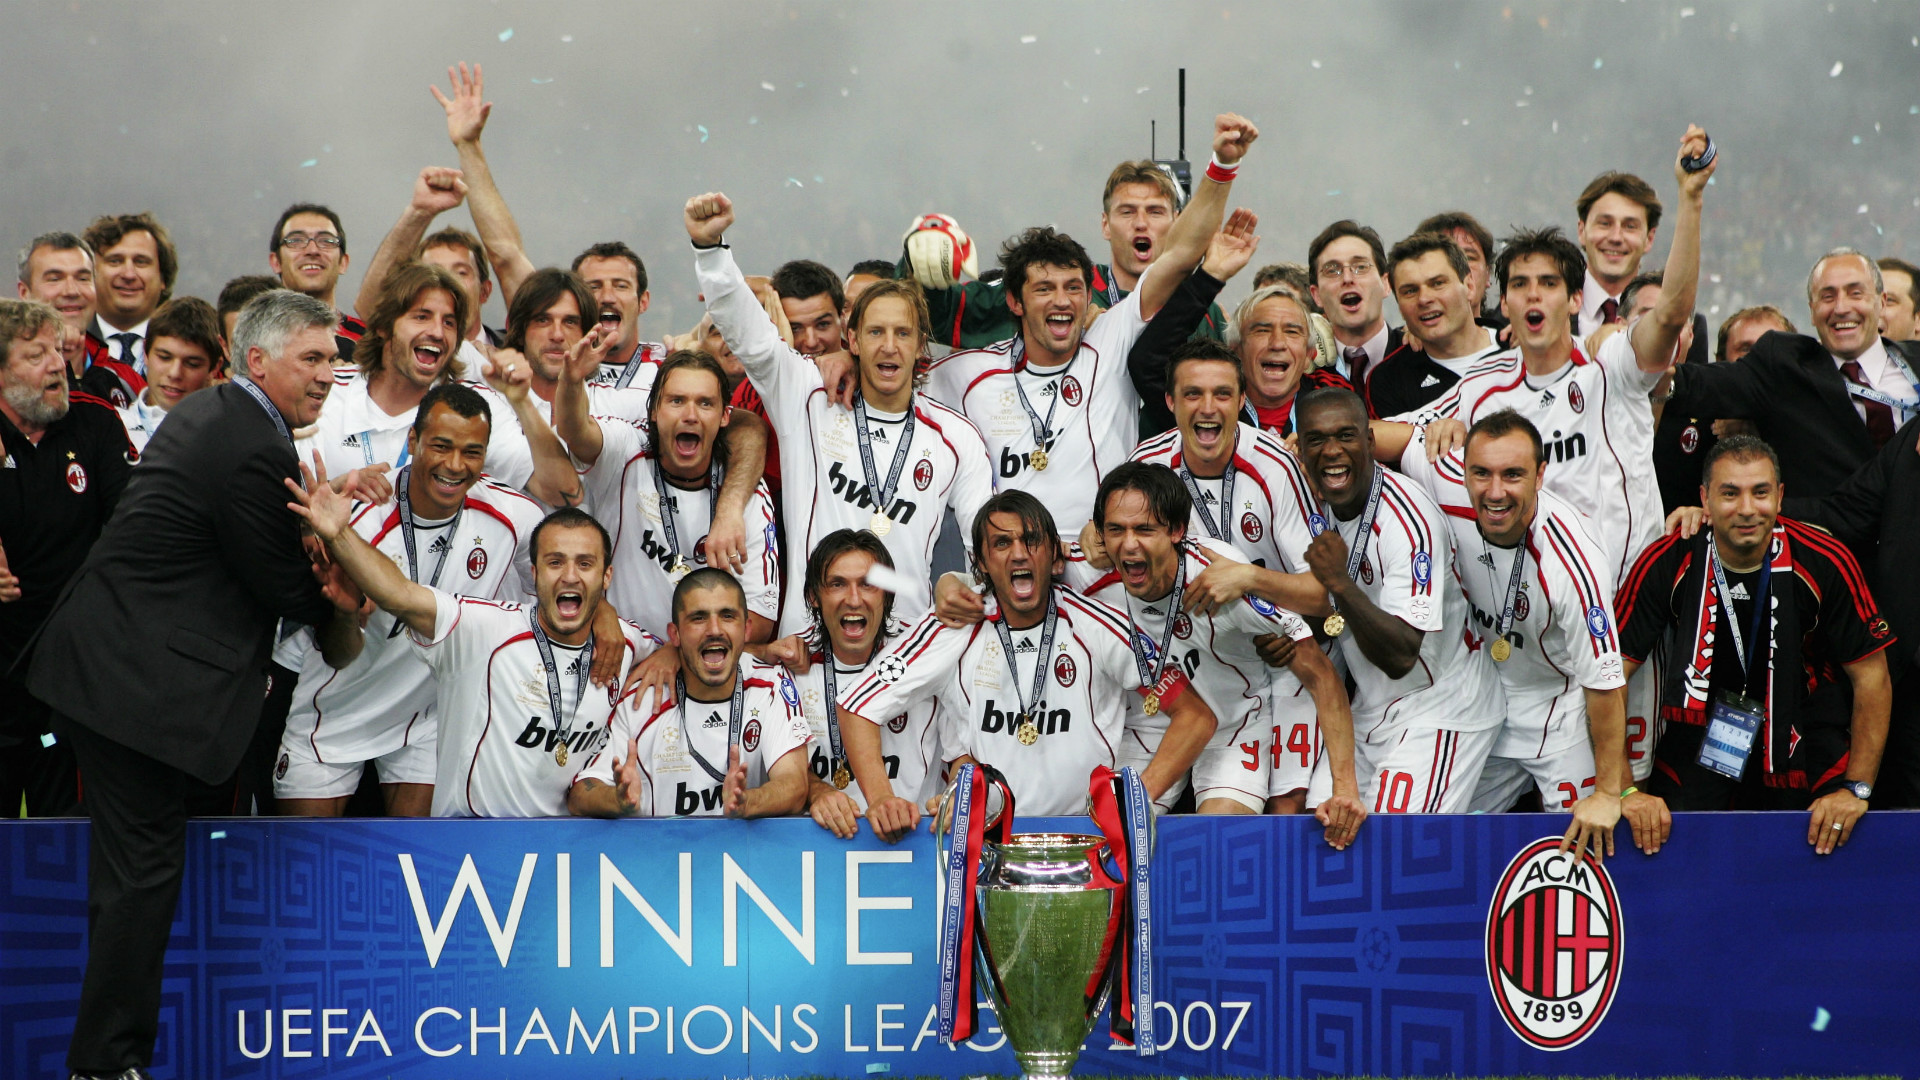 Milan Champions League 2007